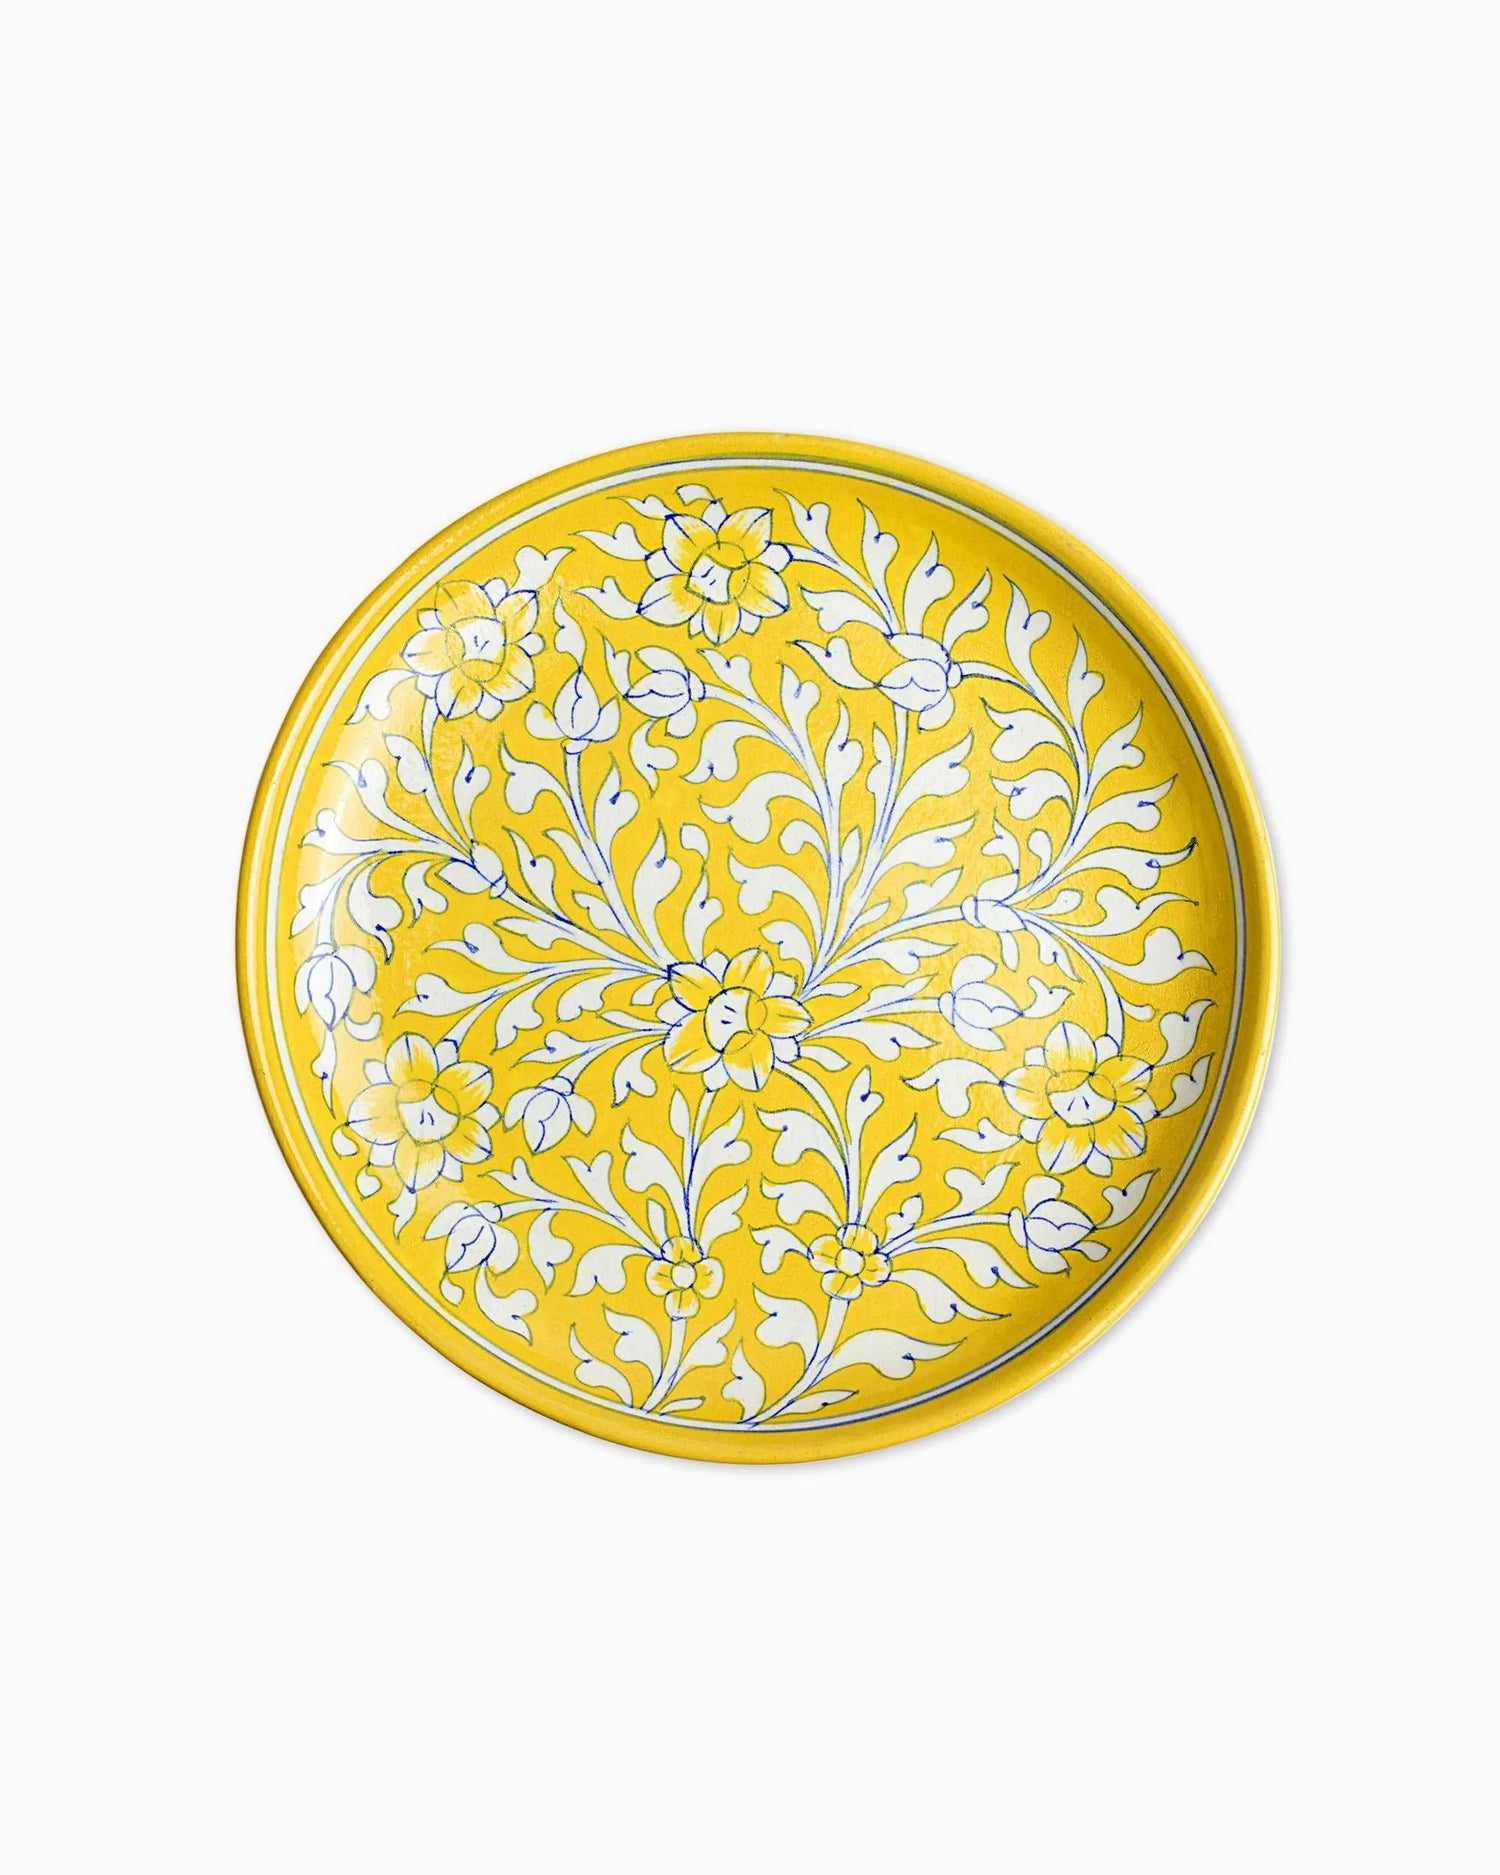 Ceramic Floral Wall Décor Plate